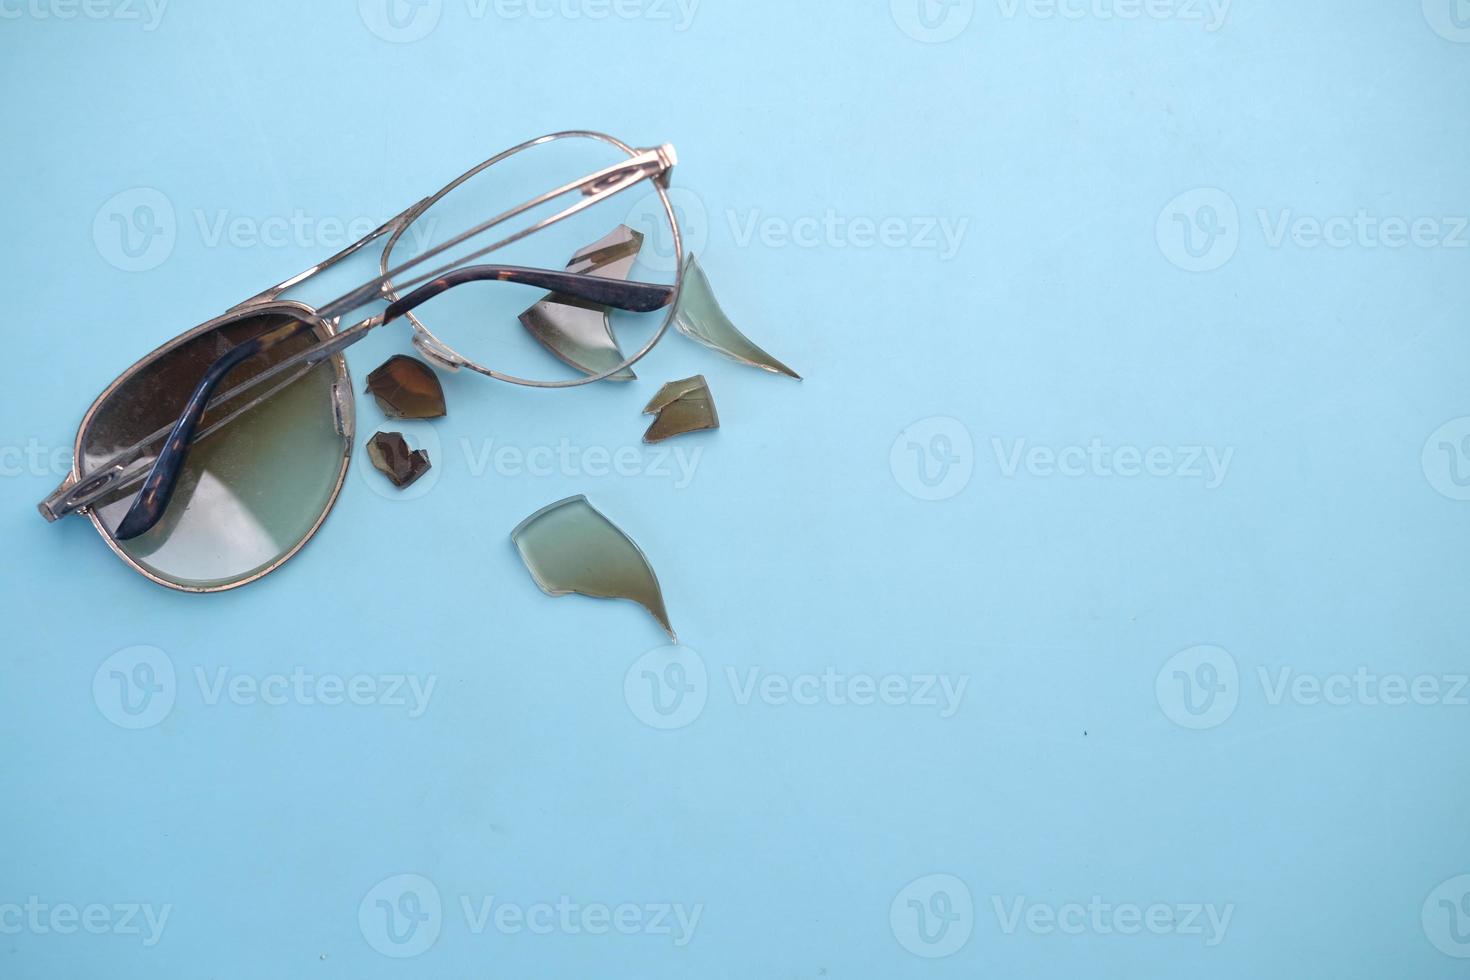 trasigt glasögon på bordet med kopia utrymme foto